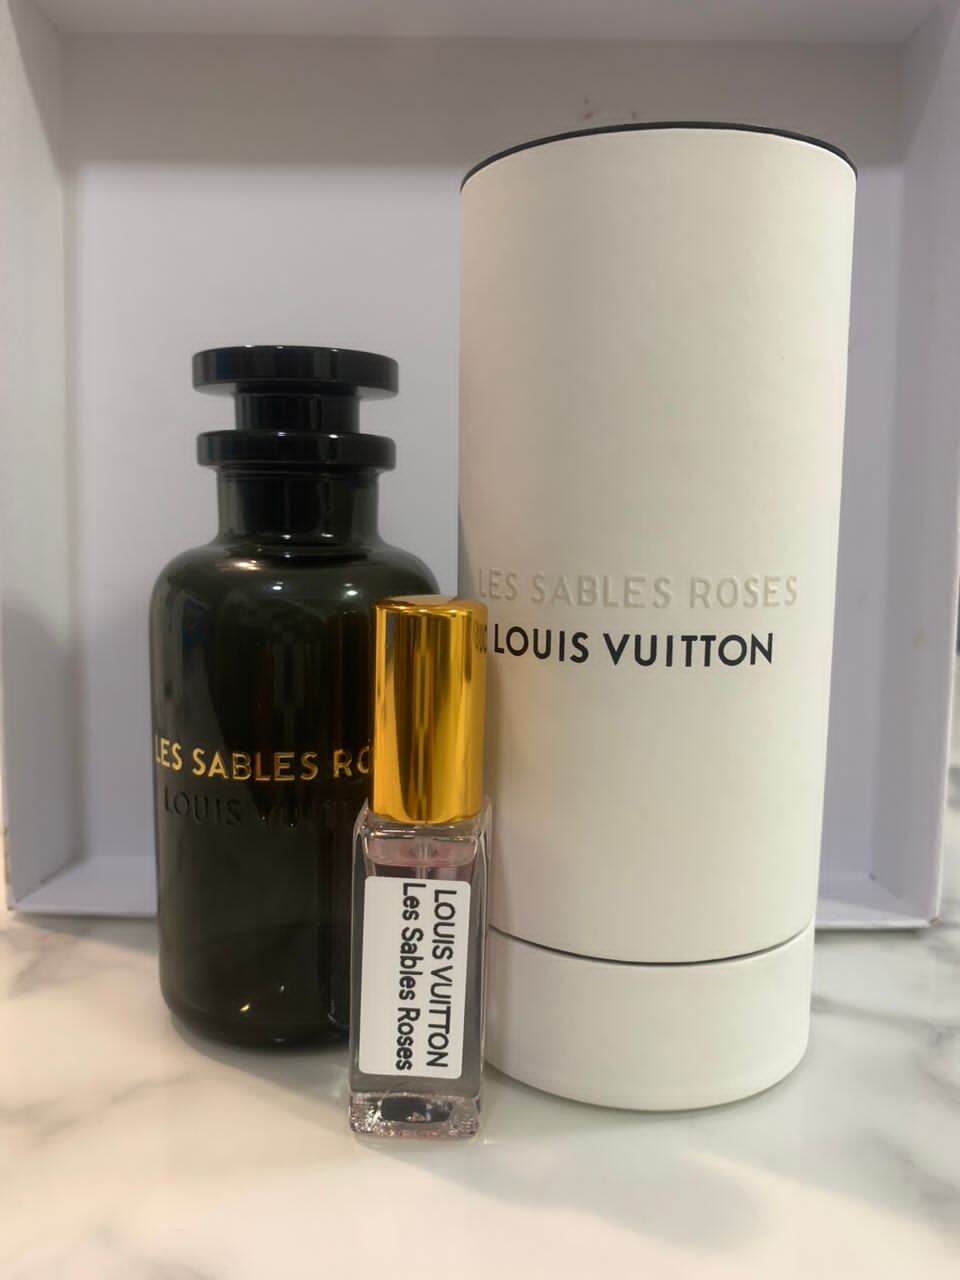 LOUIS VUITTON LES SABLES ROSES 5ML - Fragrance Myra